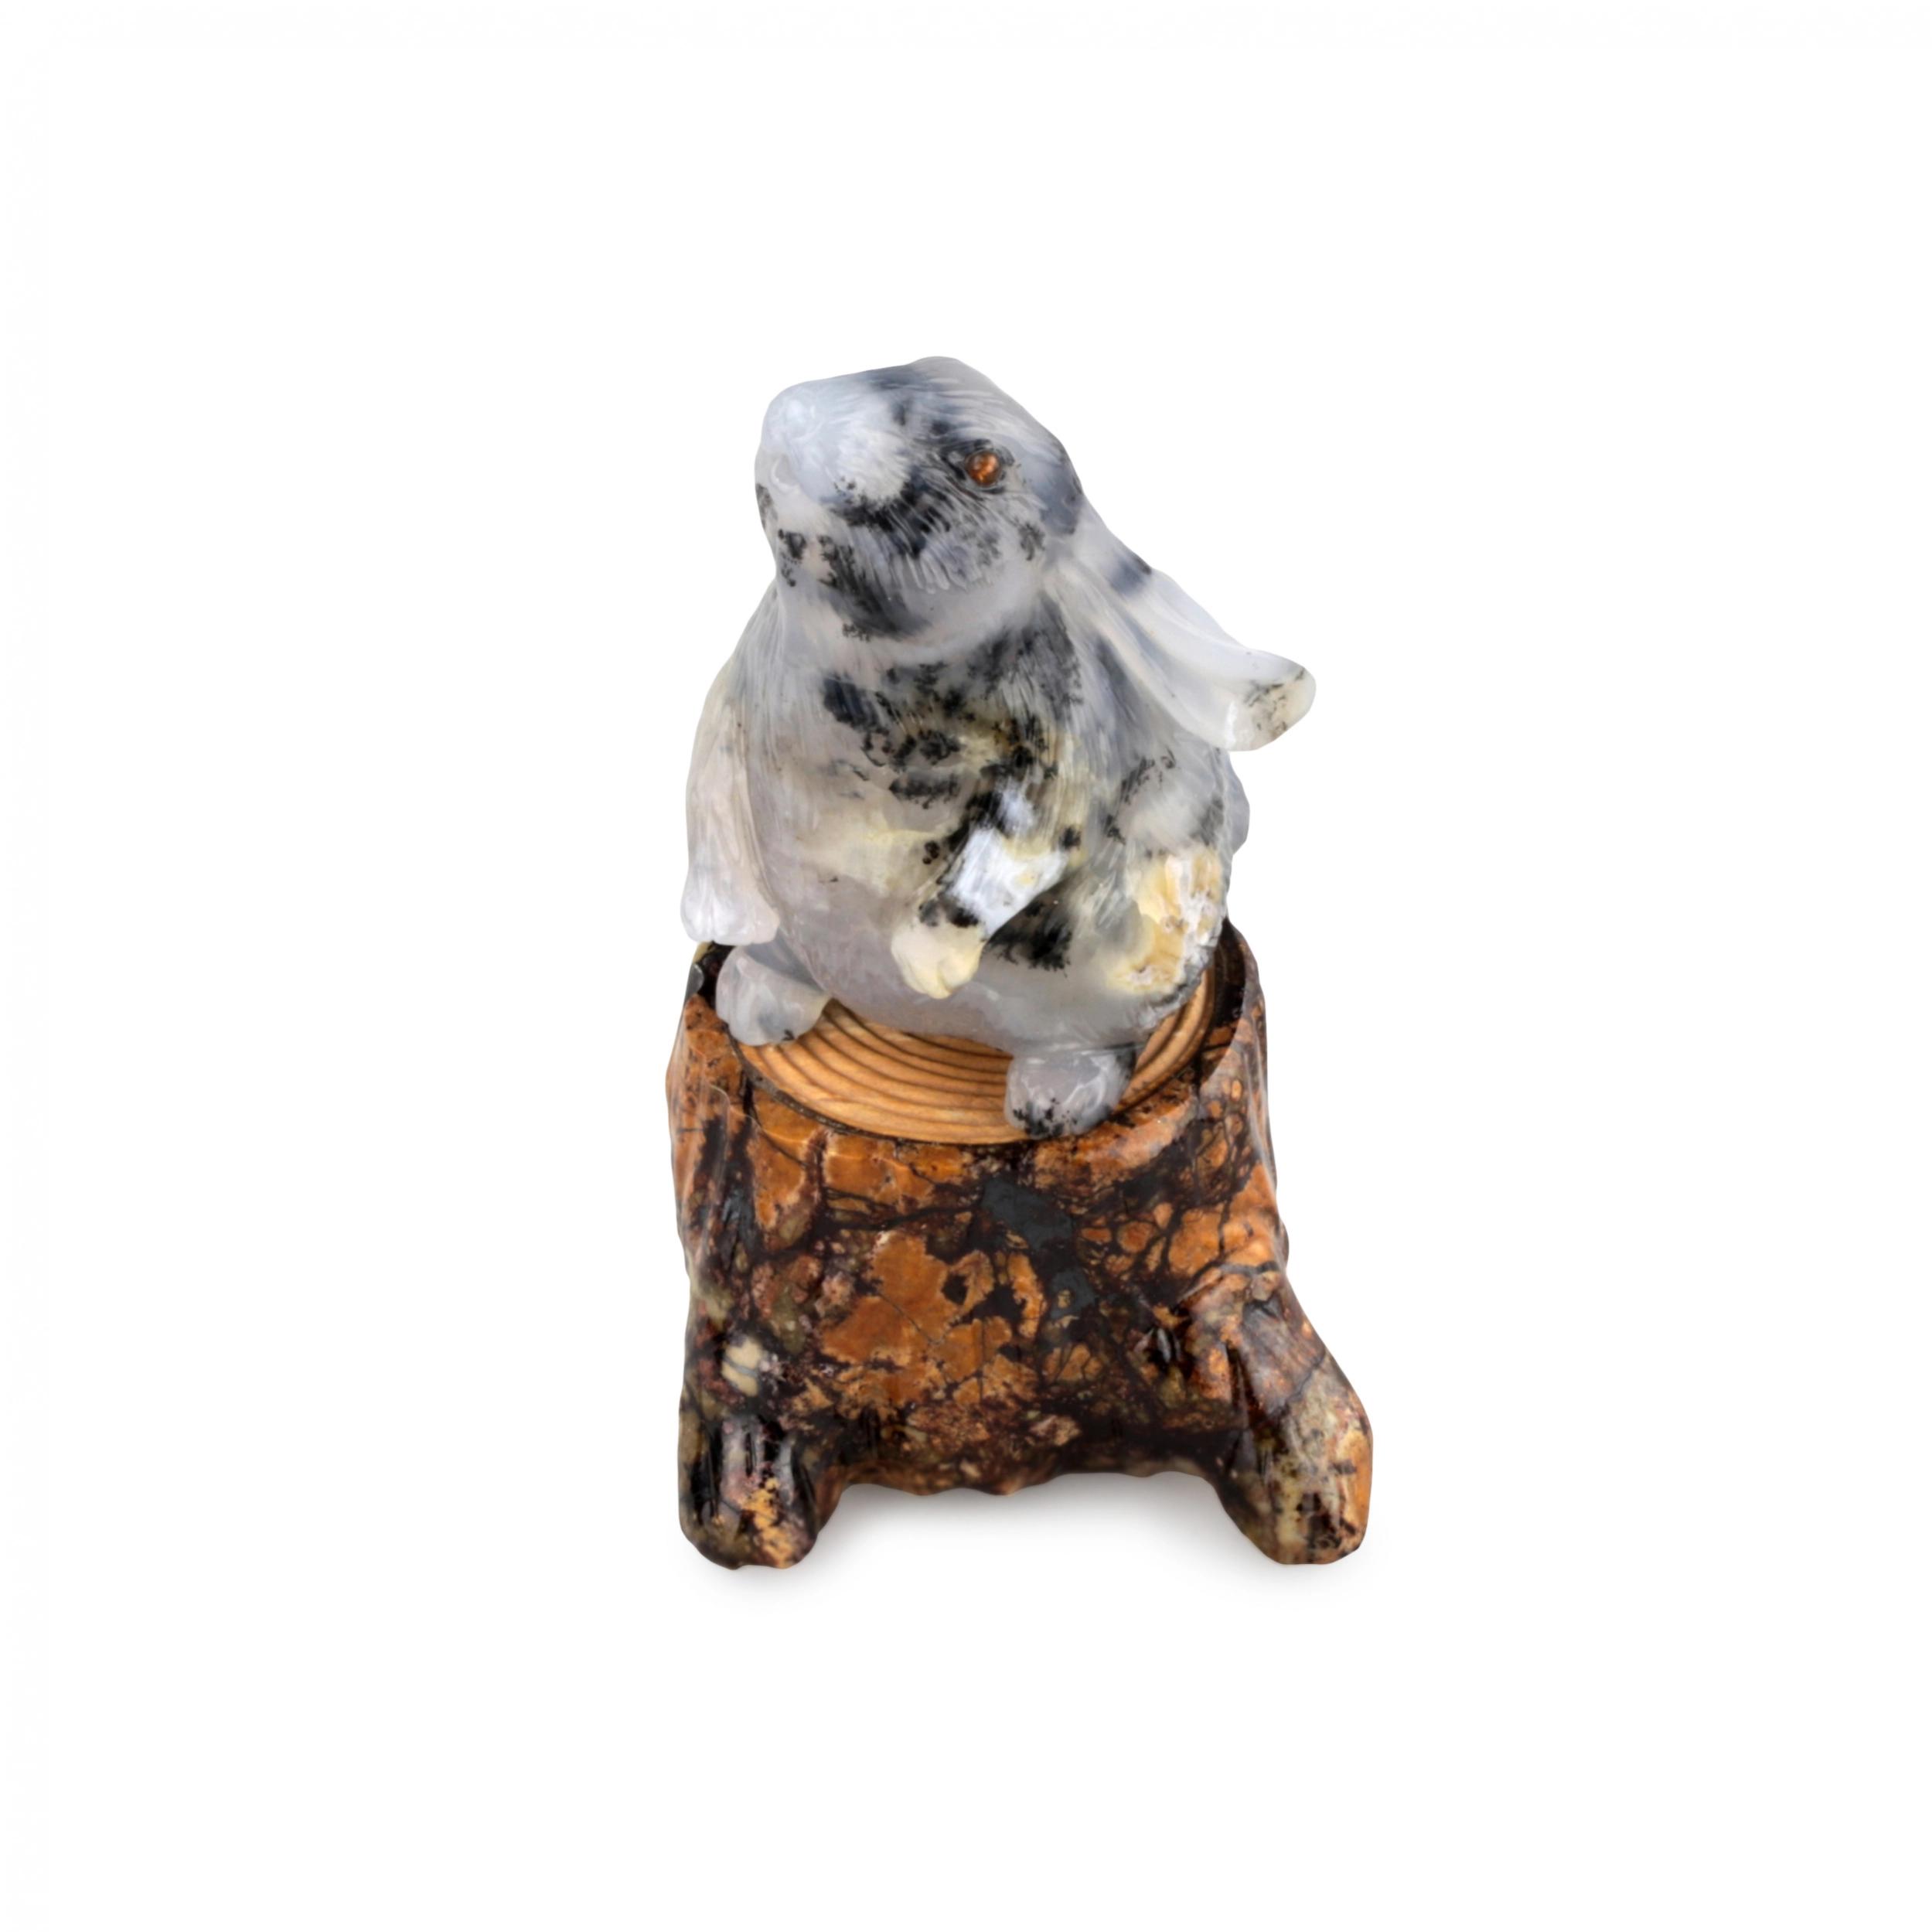 Figurine "Hare on a stump"